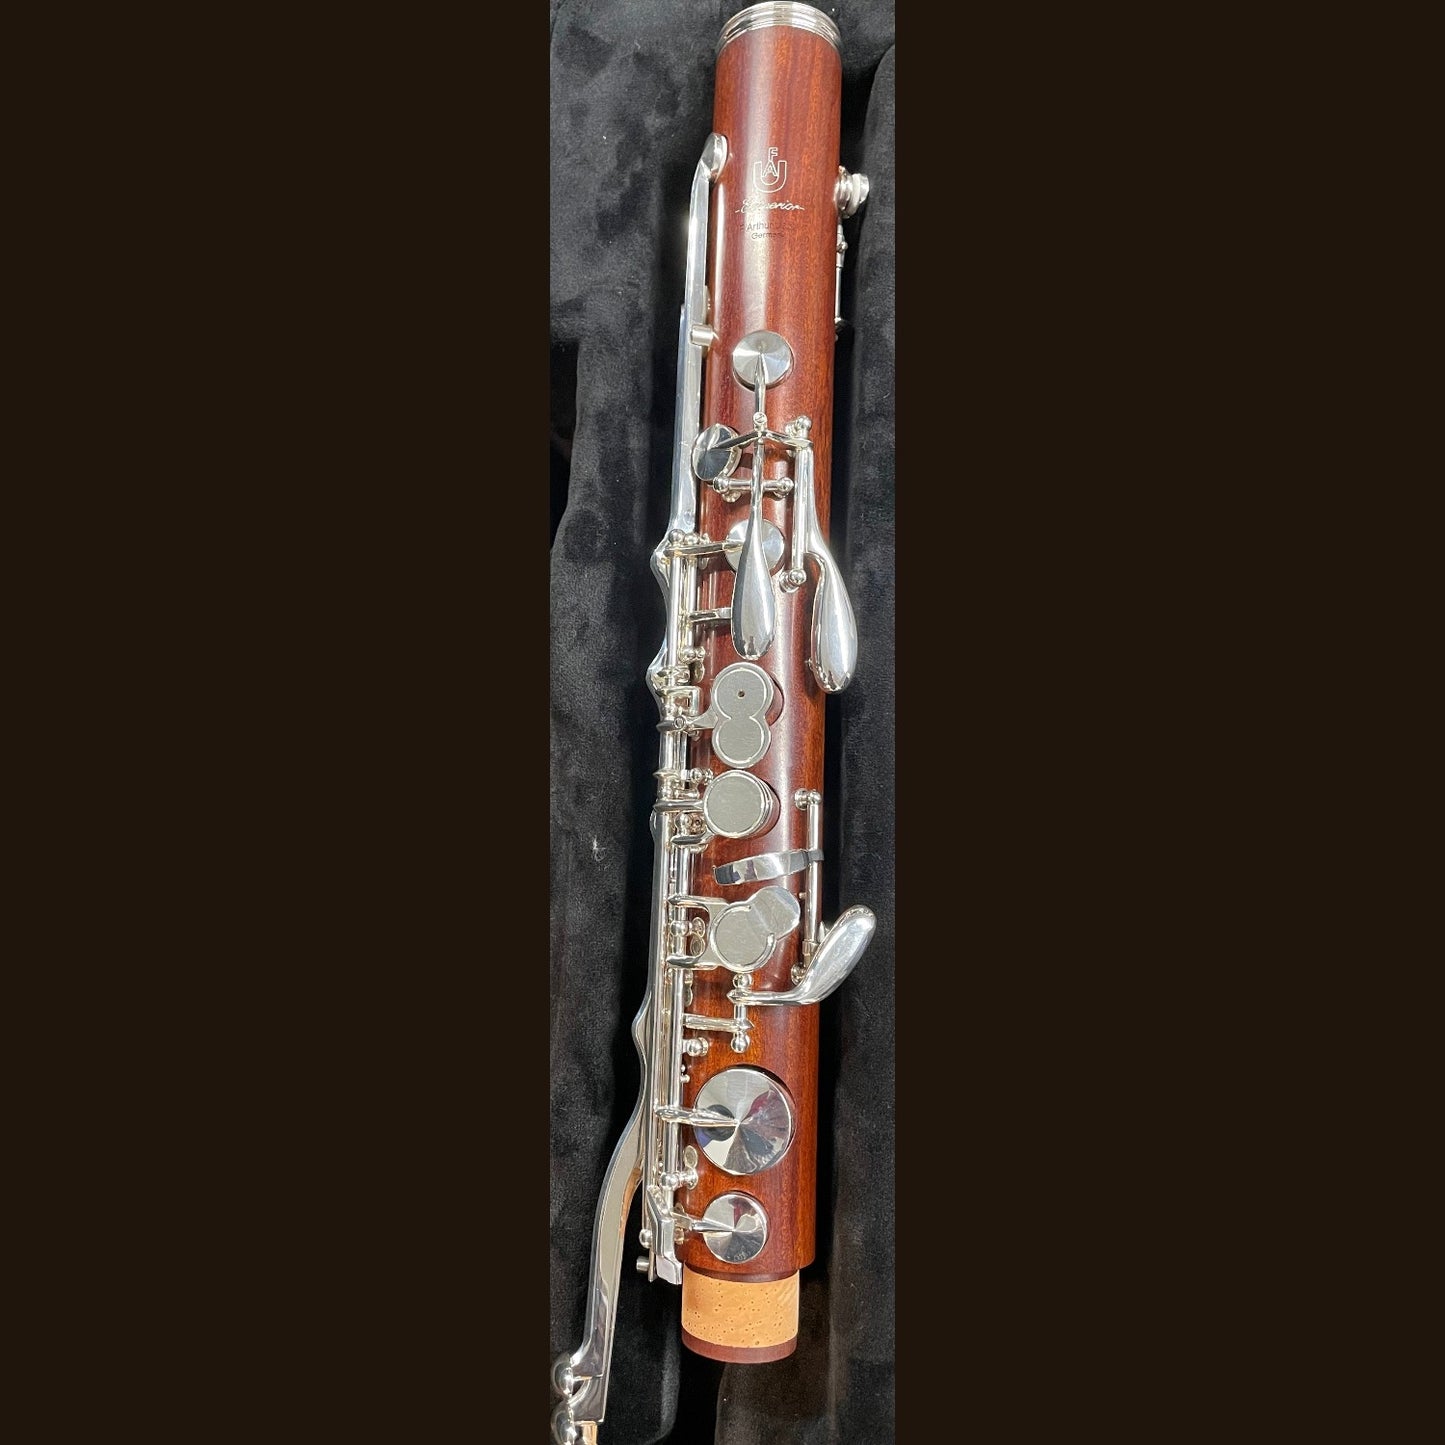 Full upper joint of Uebel Emperior bass clarinet in mopane, in case